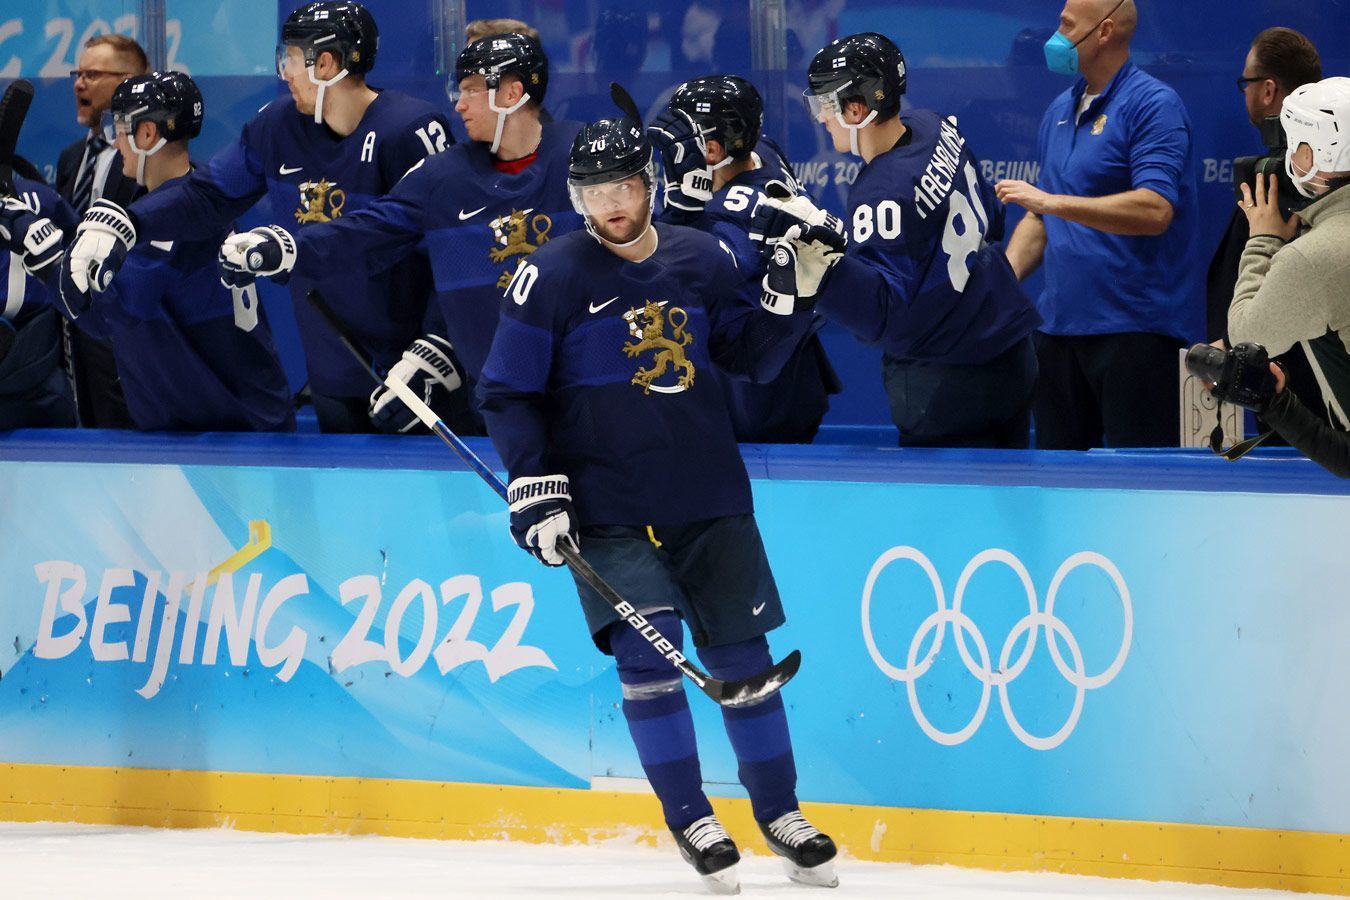 Финляндия — Норвегия прогноз на матч 13 мая на ЧМ-2022 по хоккею: ставки и коэффициенты на игру